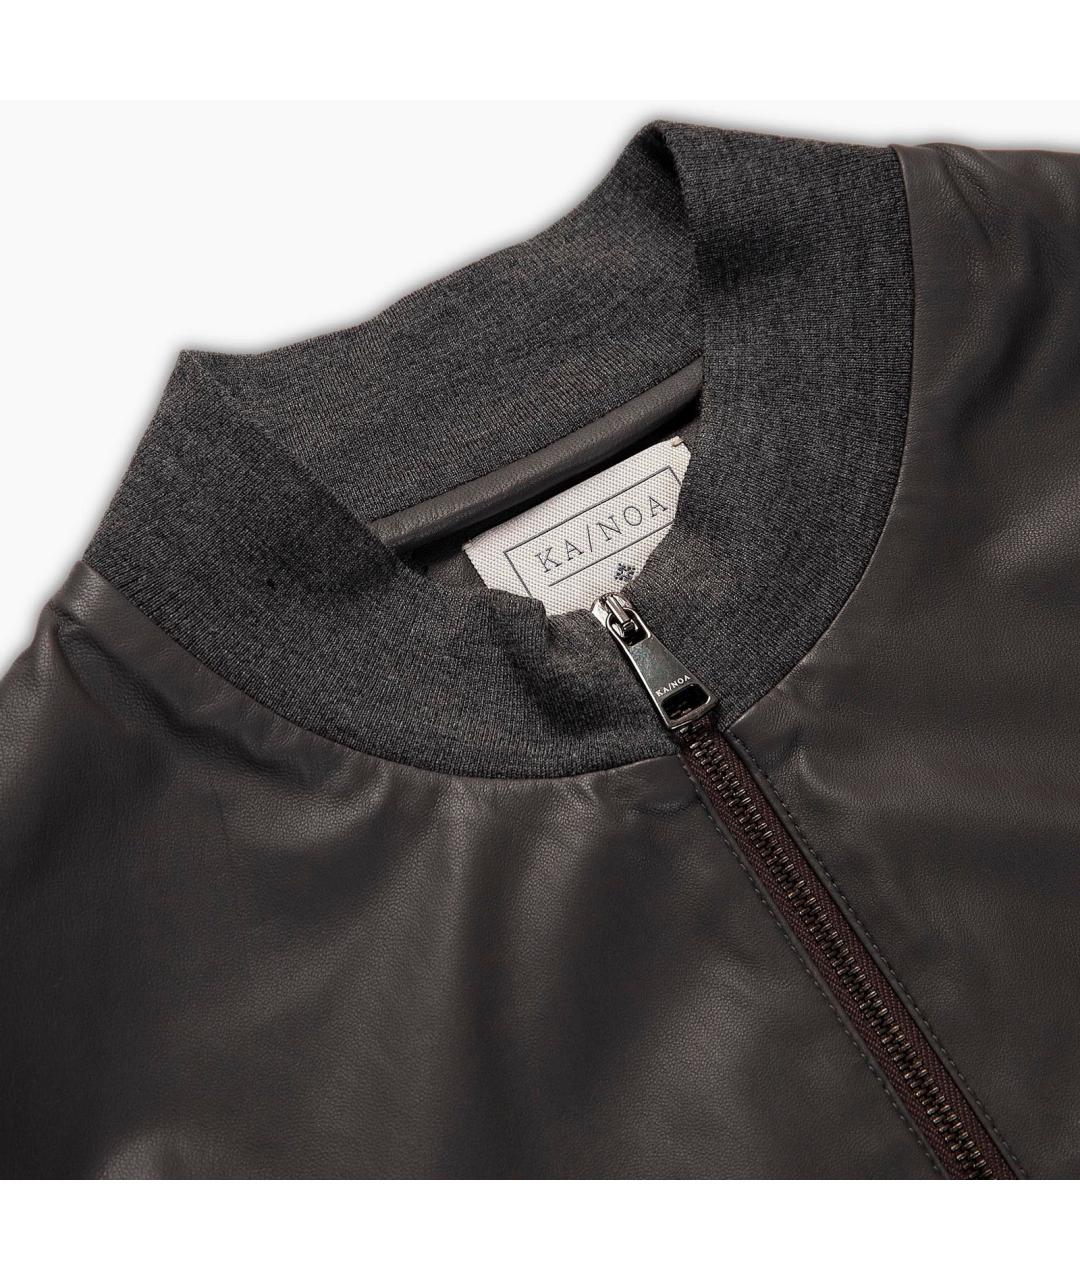 KA/NOA Серый кожаный джемпер / свитер, фото 2